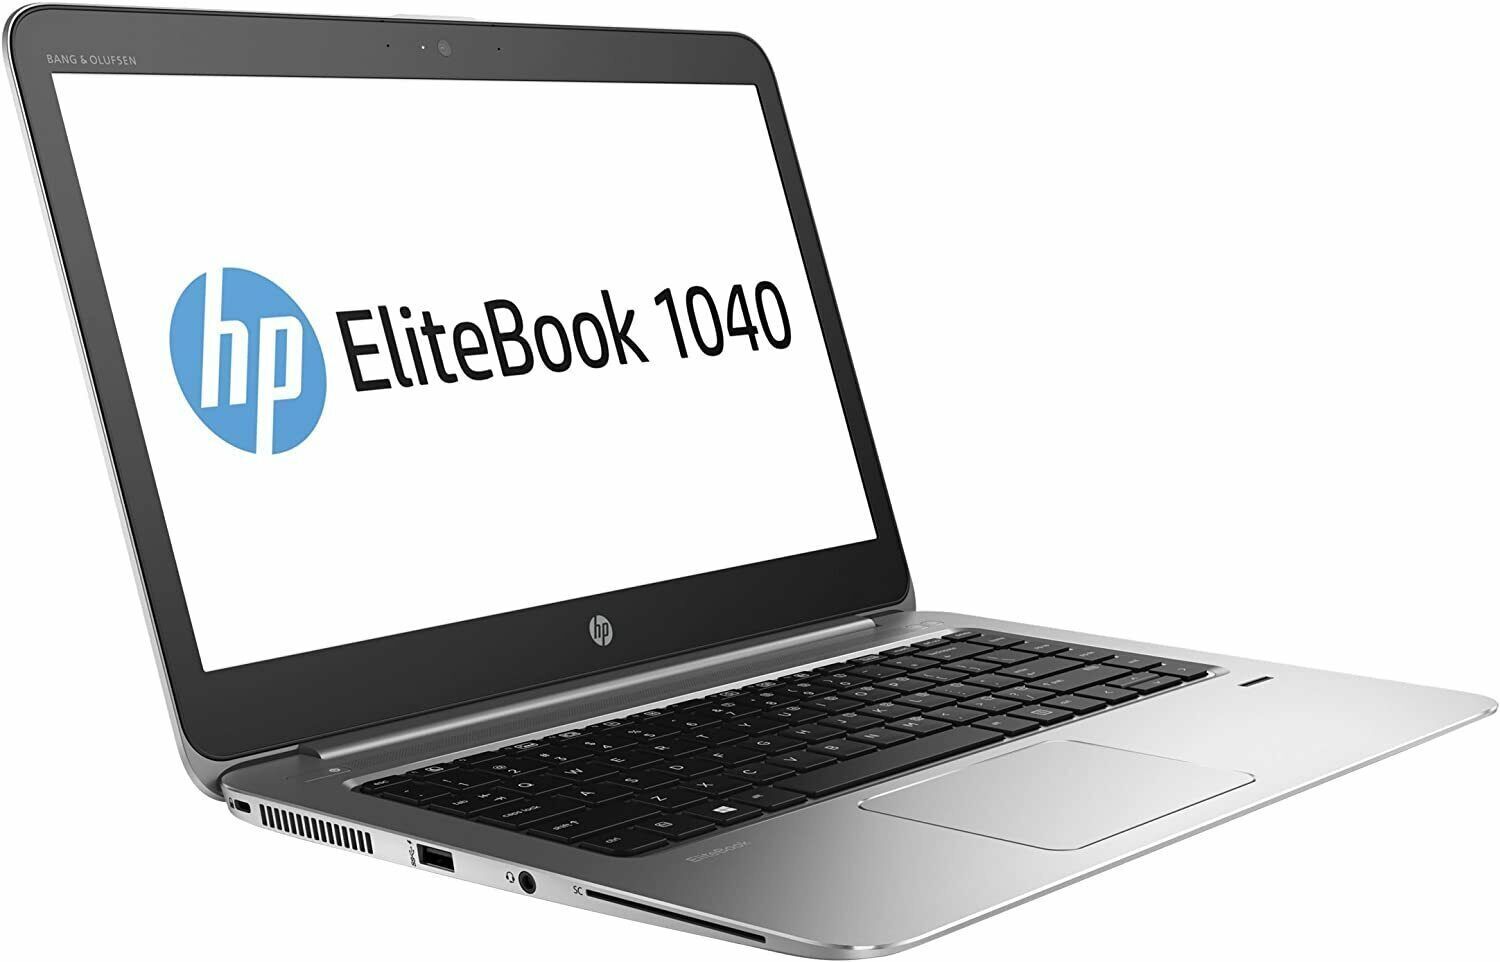 HP Elitebook Folio 1040 G3 i7 6500u 2.5Ghz 8GB RAM 256GB SSD 14" HD Win 10 - B Grade Image 2